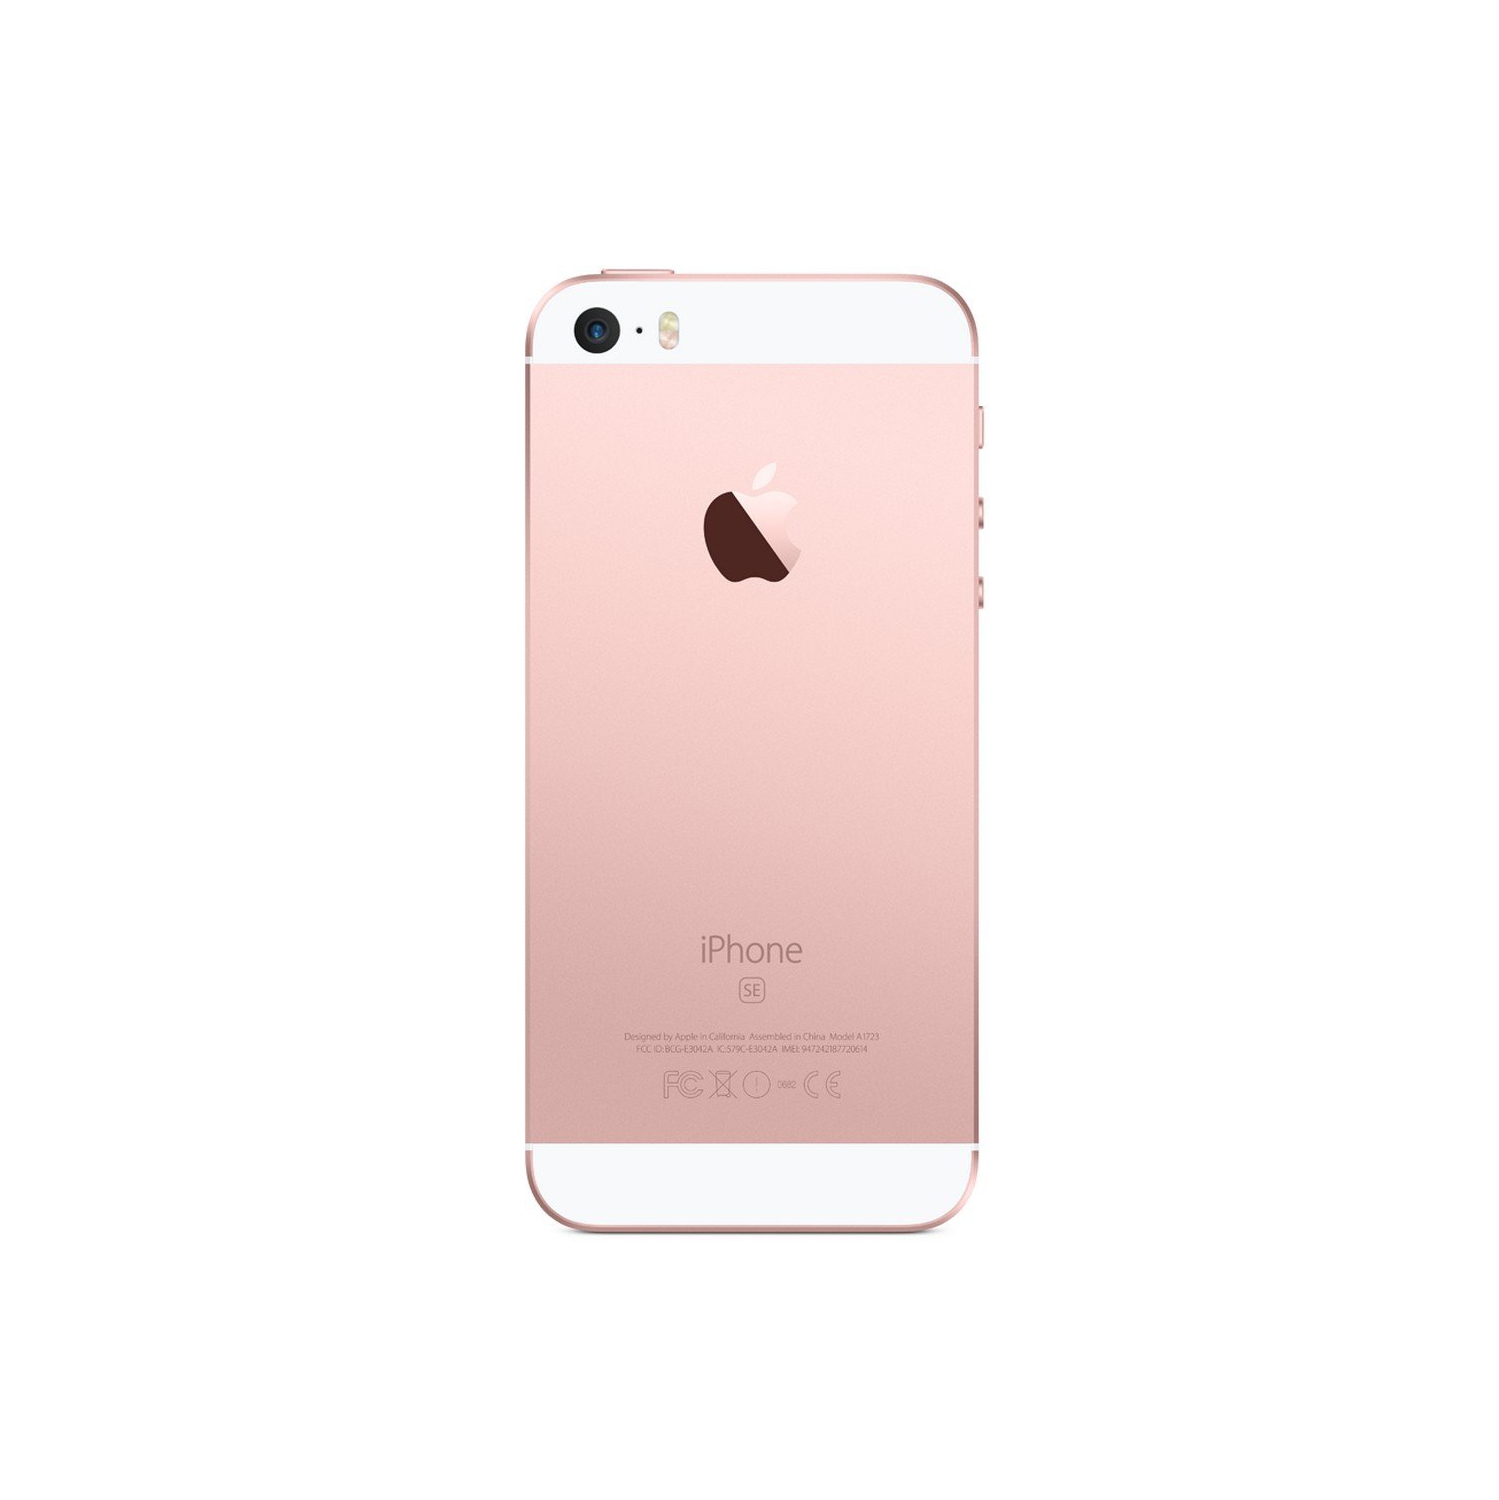 Apple iPhone SE 16GB - Unlocked Smartphone - Rose Gold - Open Box